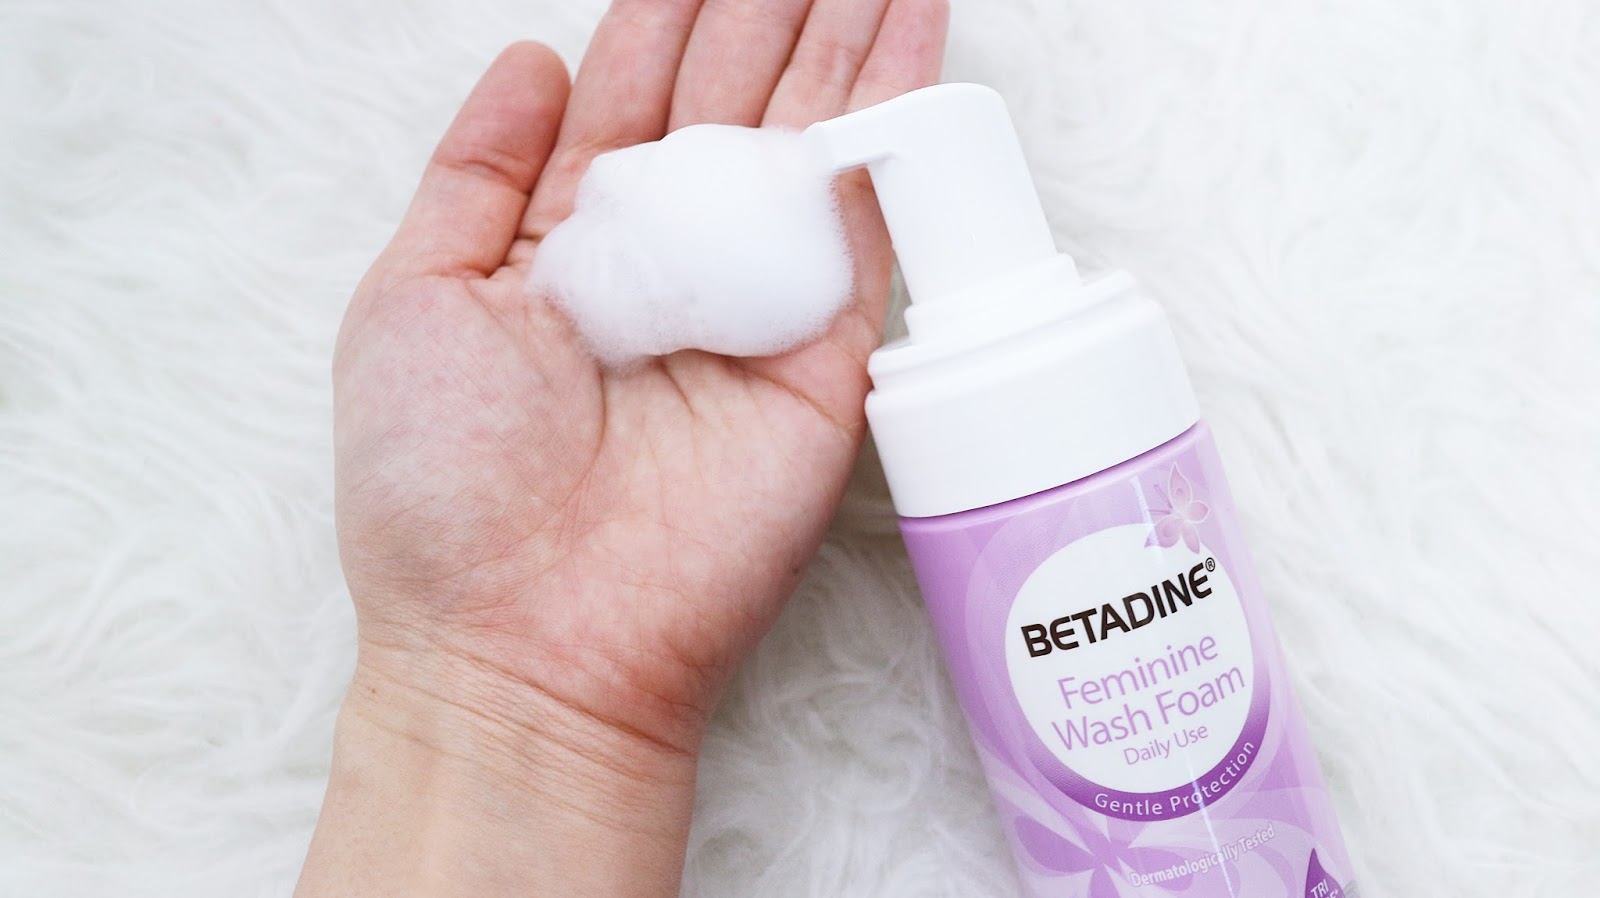 Betadine feminine hygiene